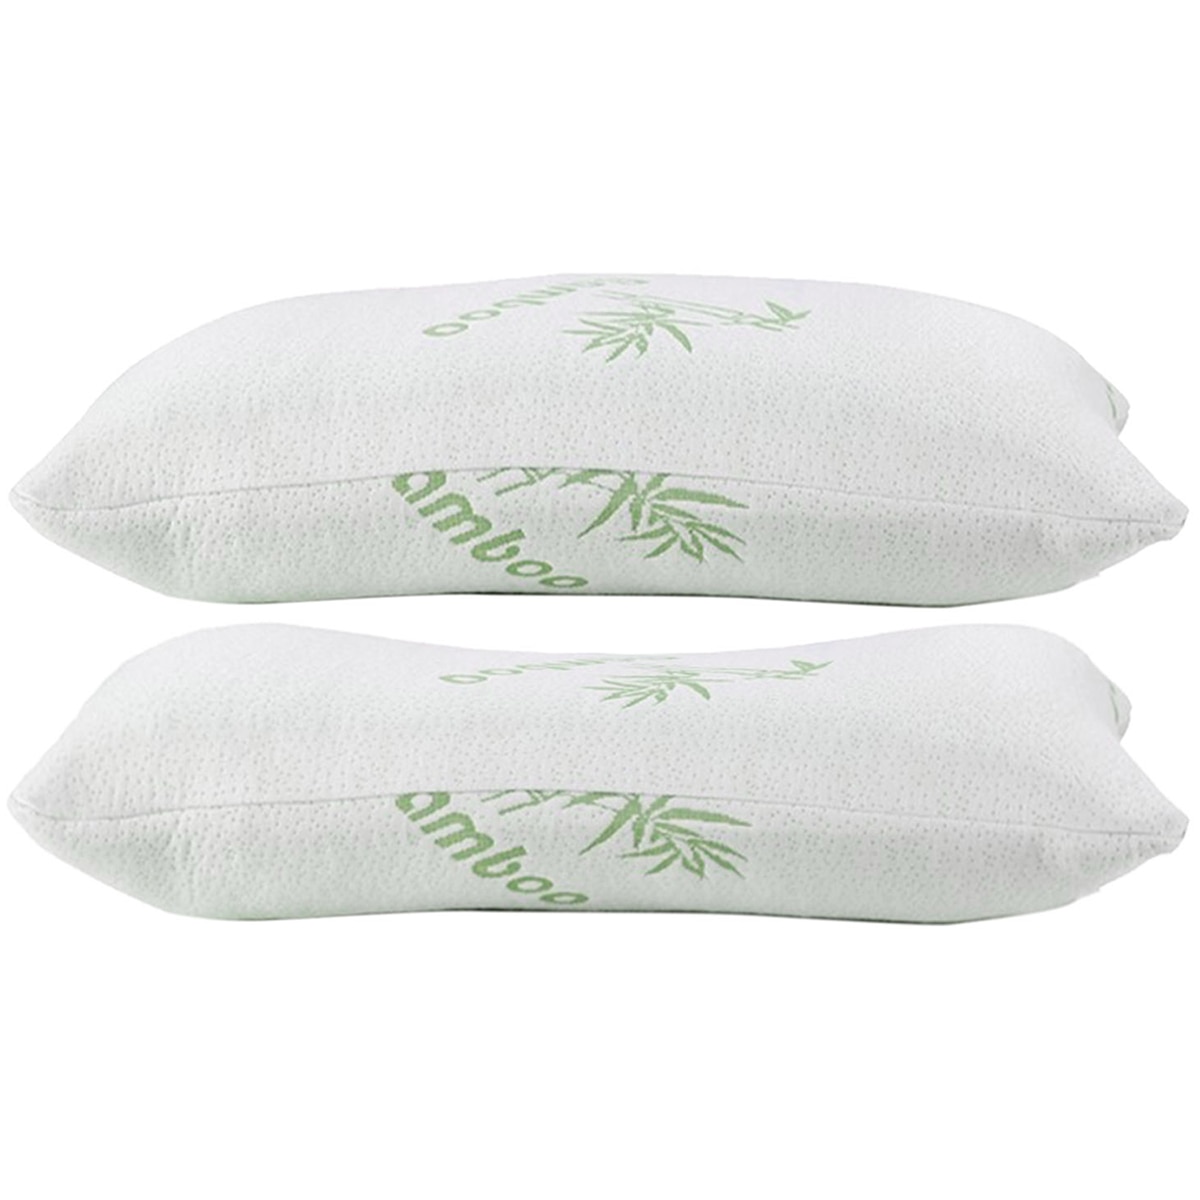 Bdirect Royal Comfort Bamboo covered Memory Foam Pillow 2 pack